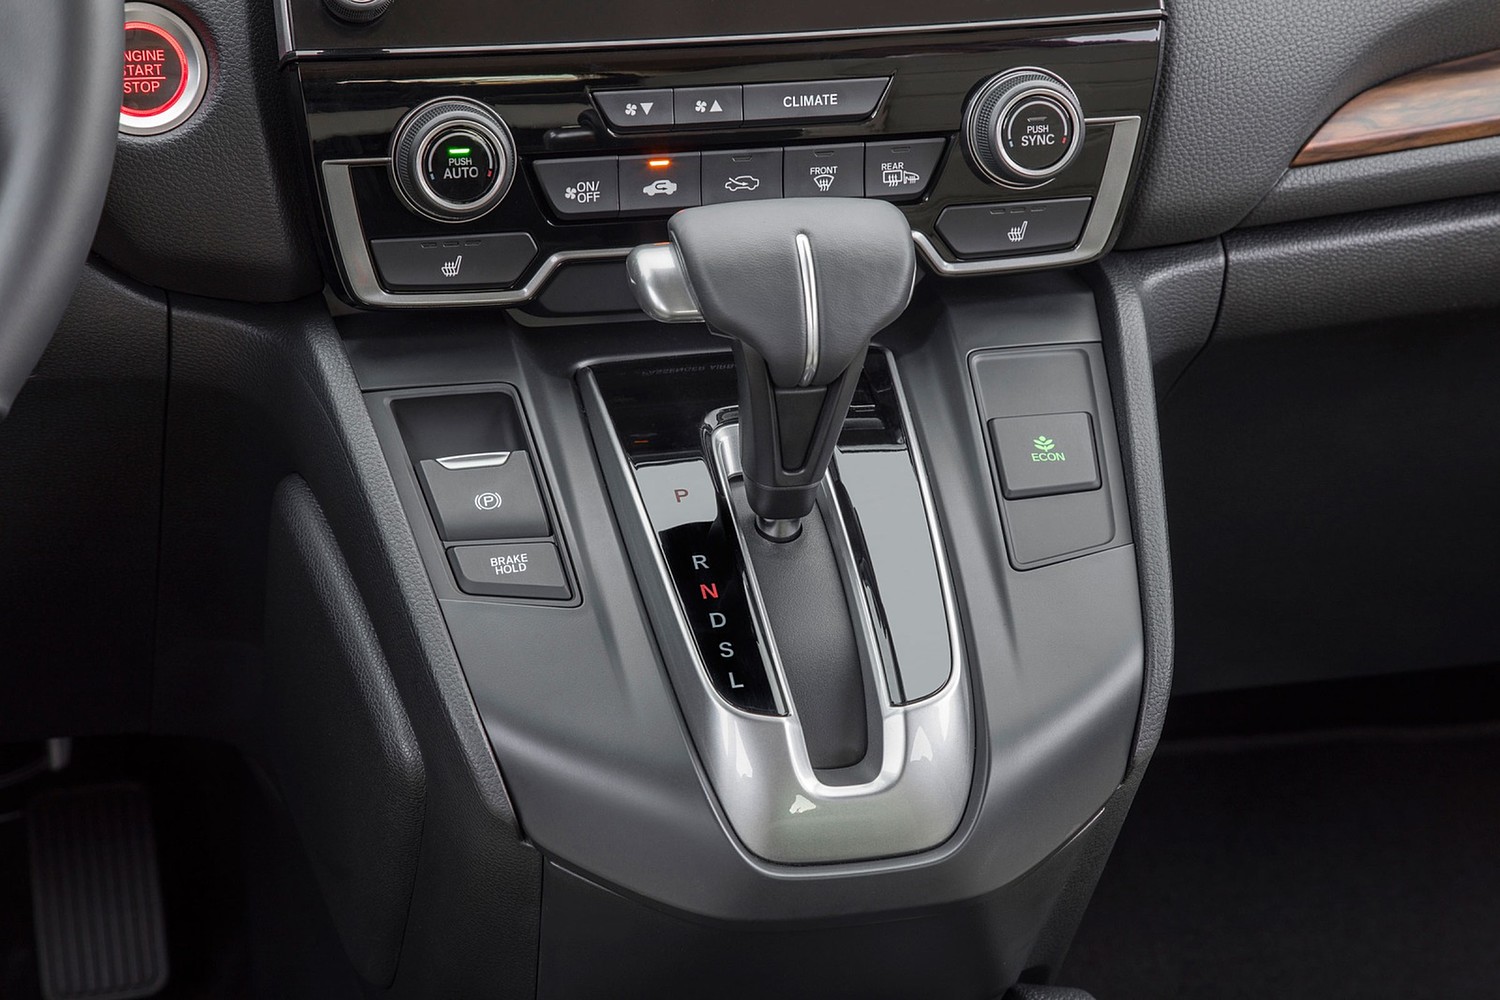 Honda CR-V Touring 4dr SUV Shifter (2017 model year shown)